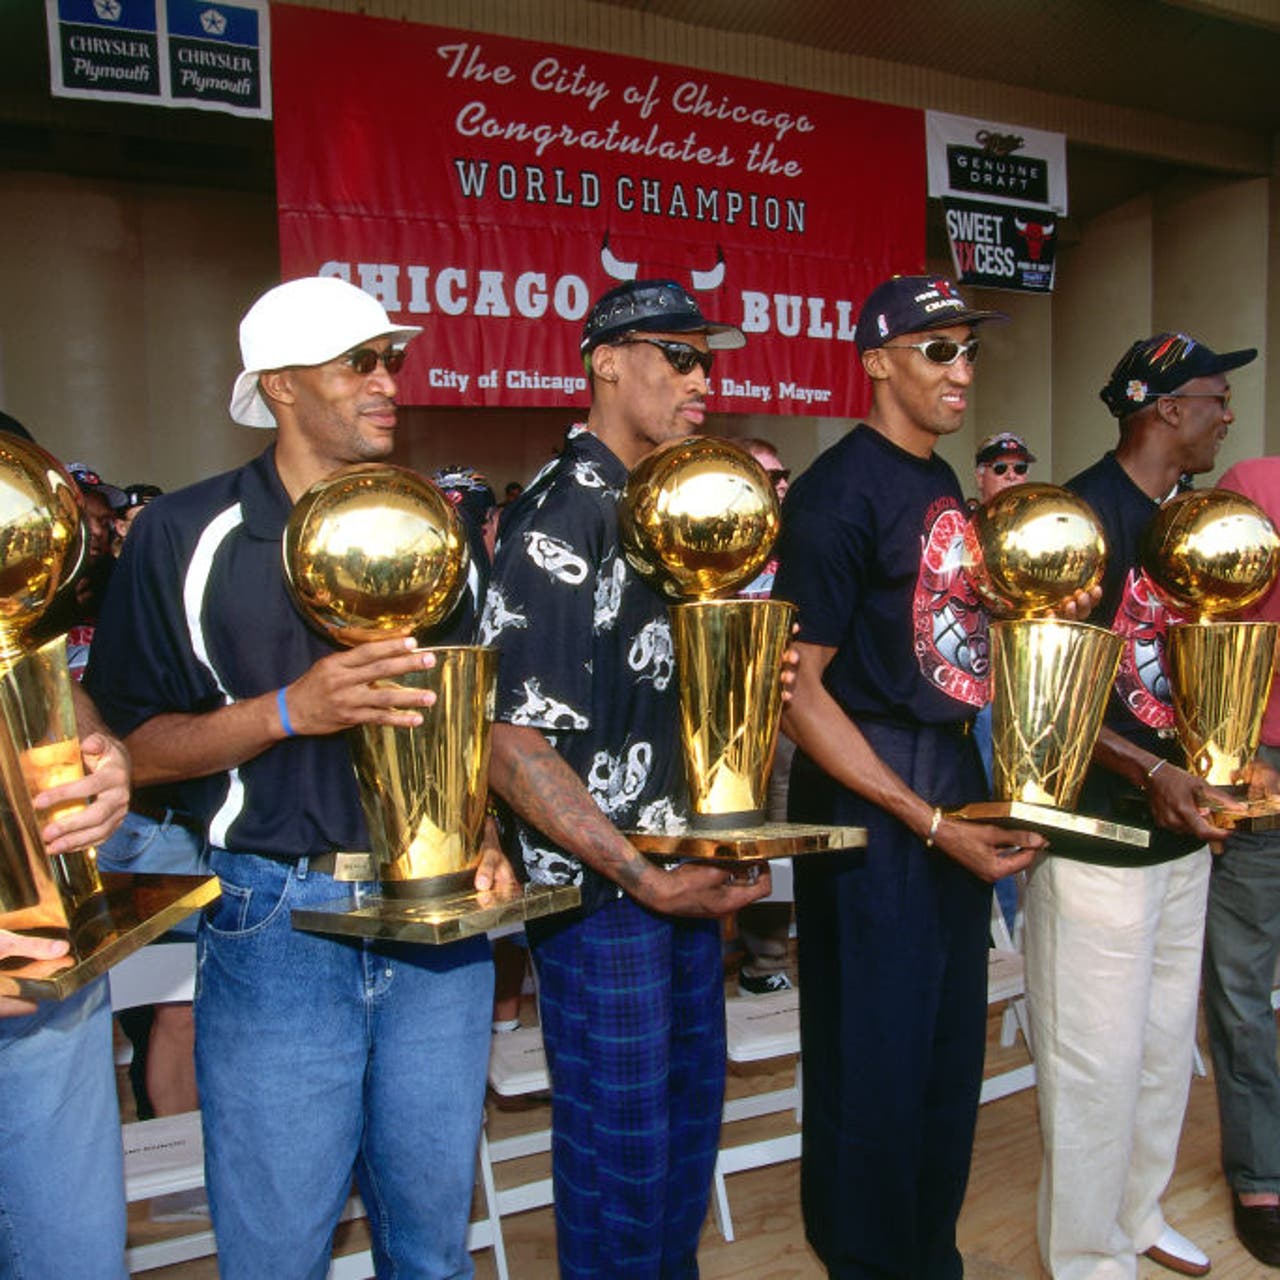 Dennis Rodman says Bulls would have won the '99 NBA championship 'easily